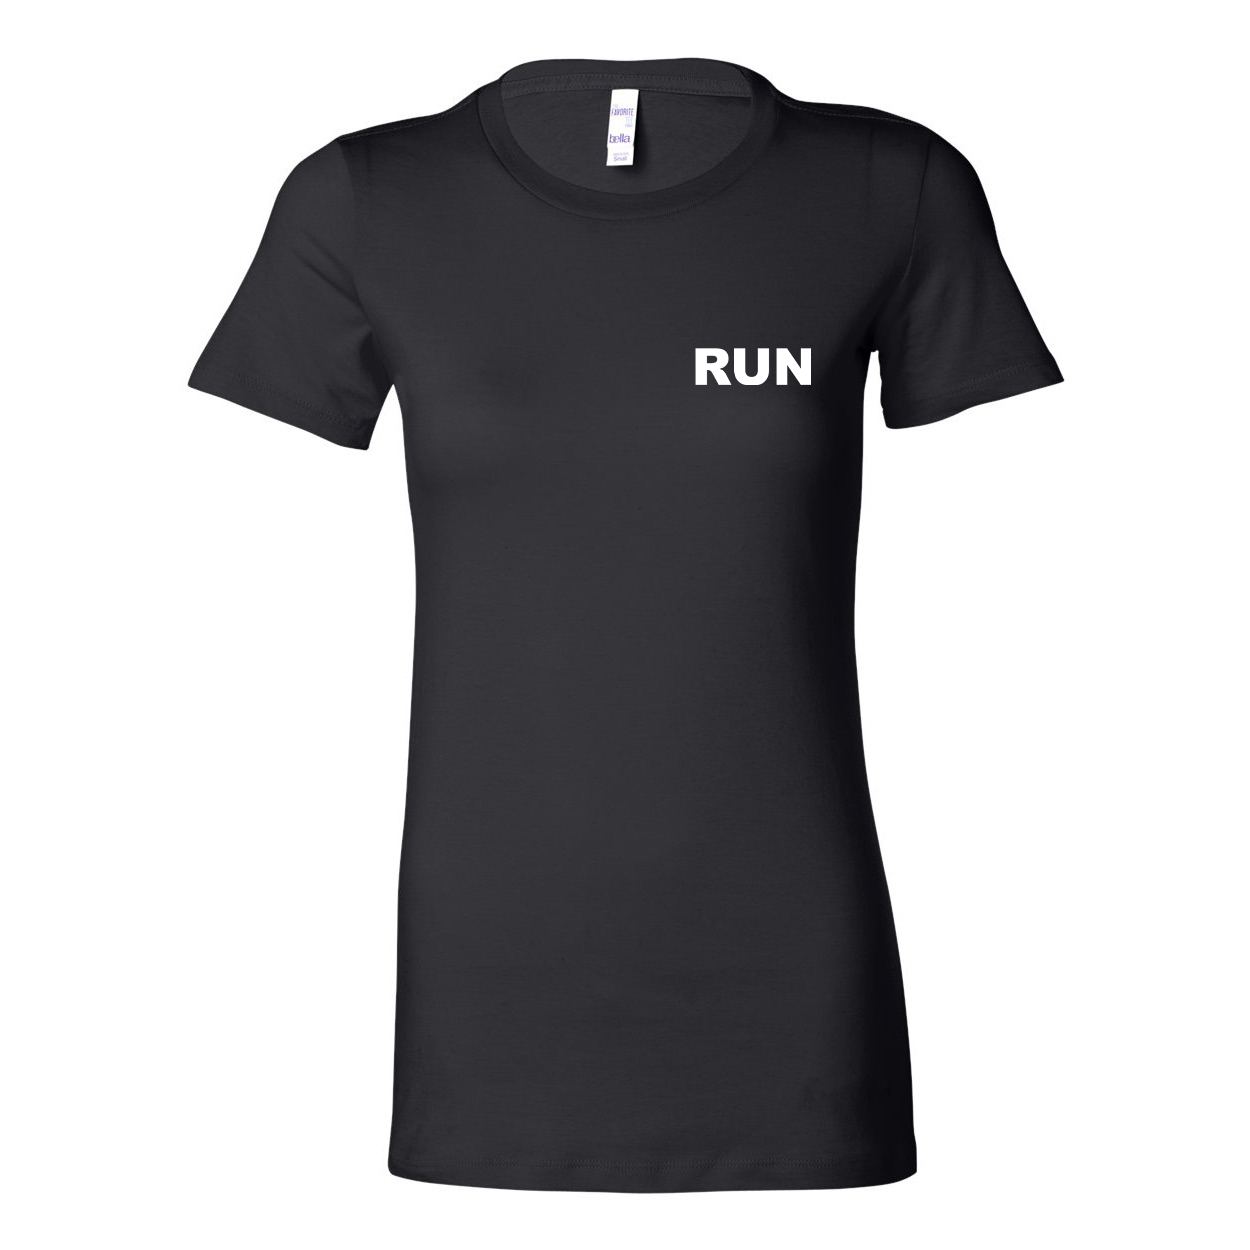 Run Brand Logo Women's Night Out Fitted Tri-Blend T-Shirt Black